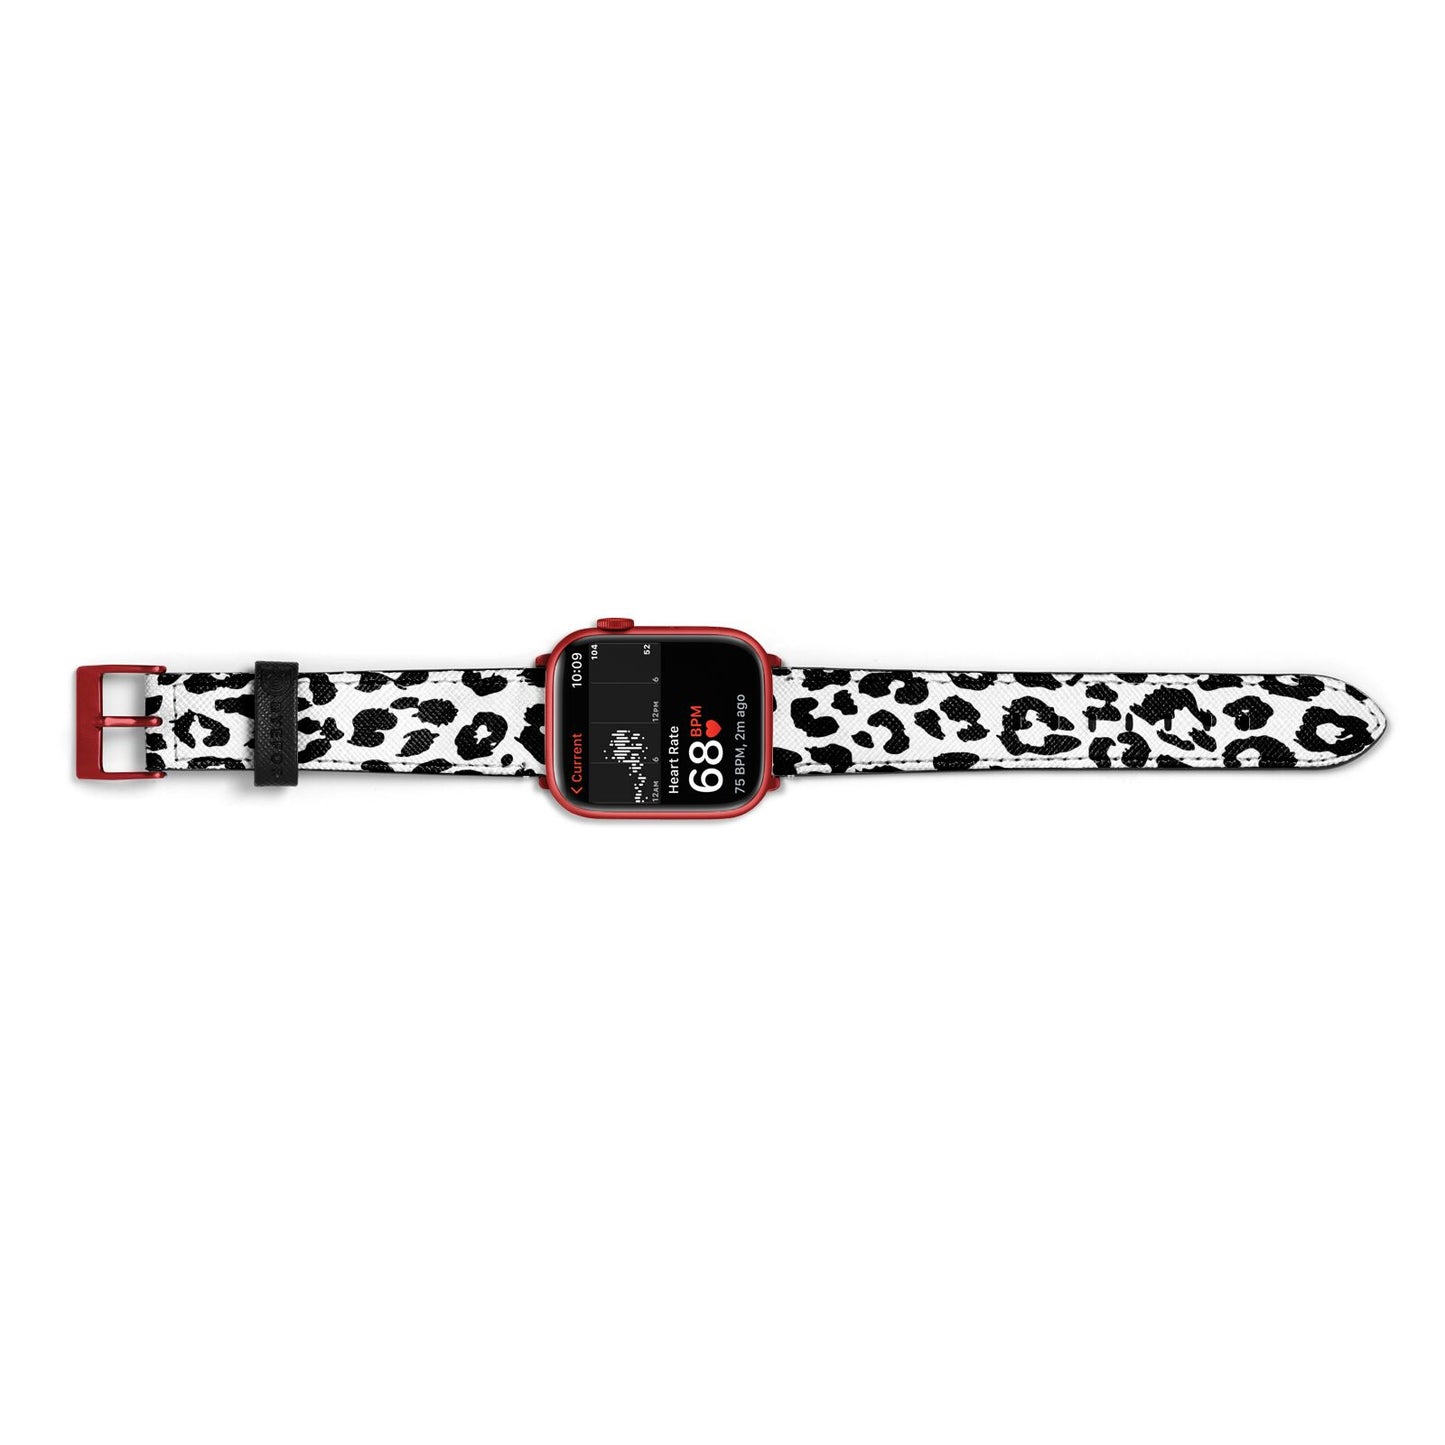 Black Leopard Print Apple Watch Strap Size 38mm Landscape Image Red Hardware